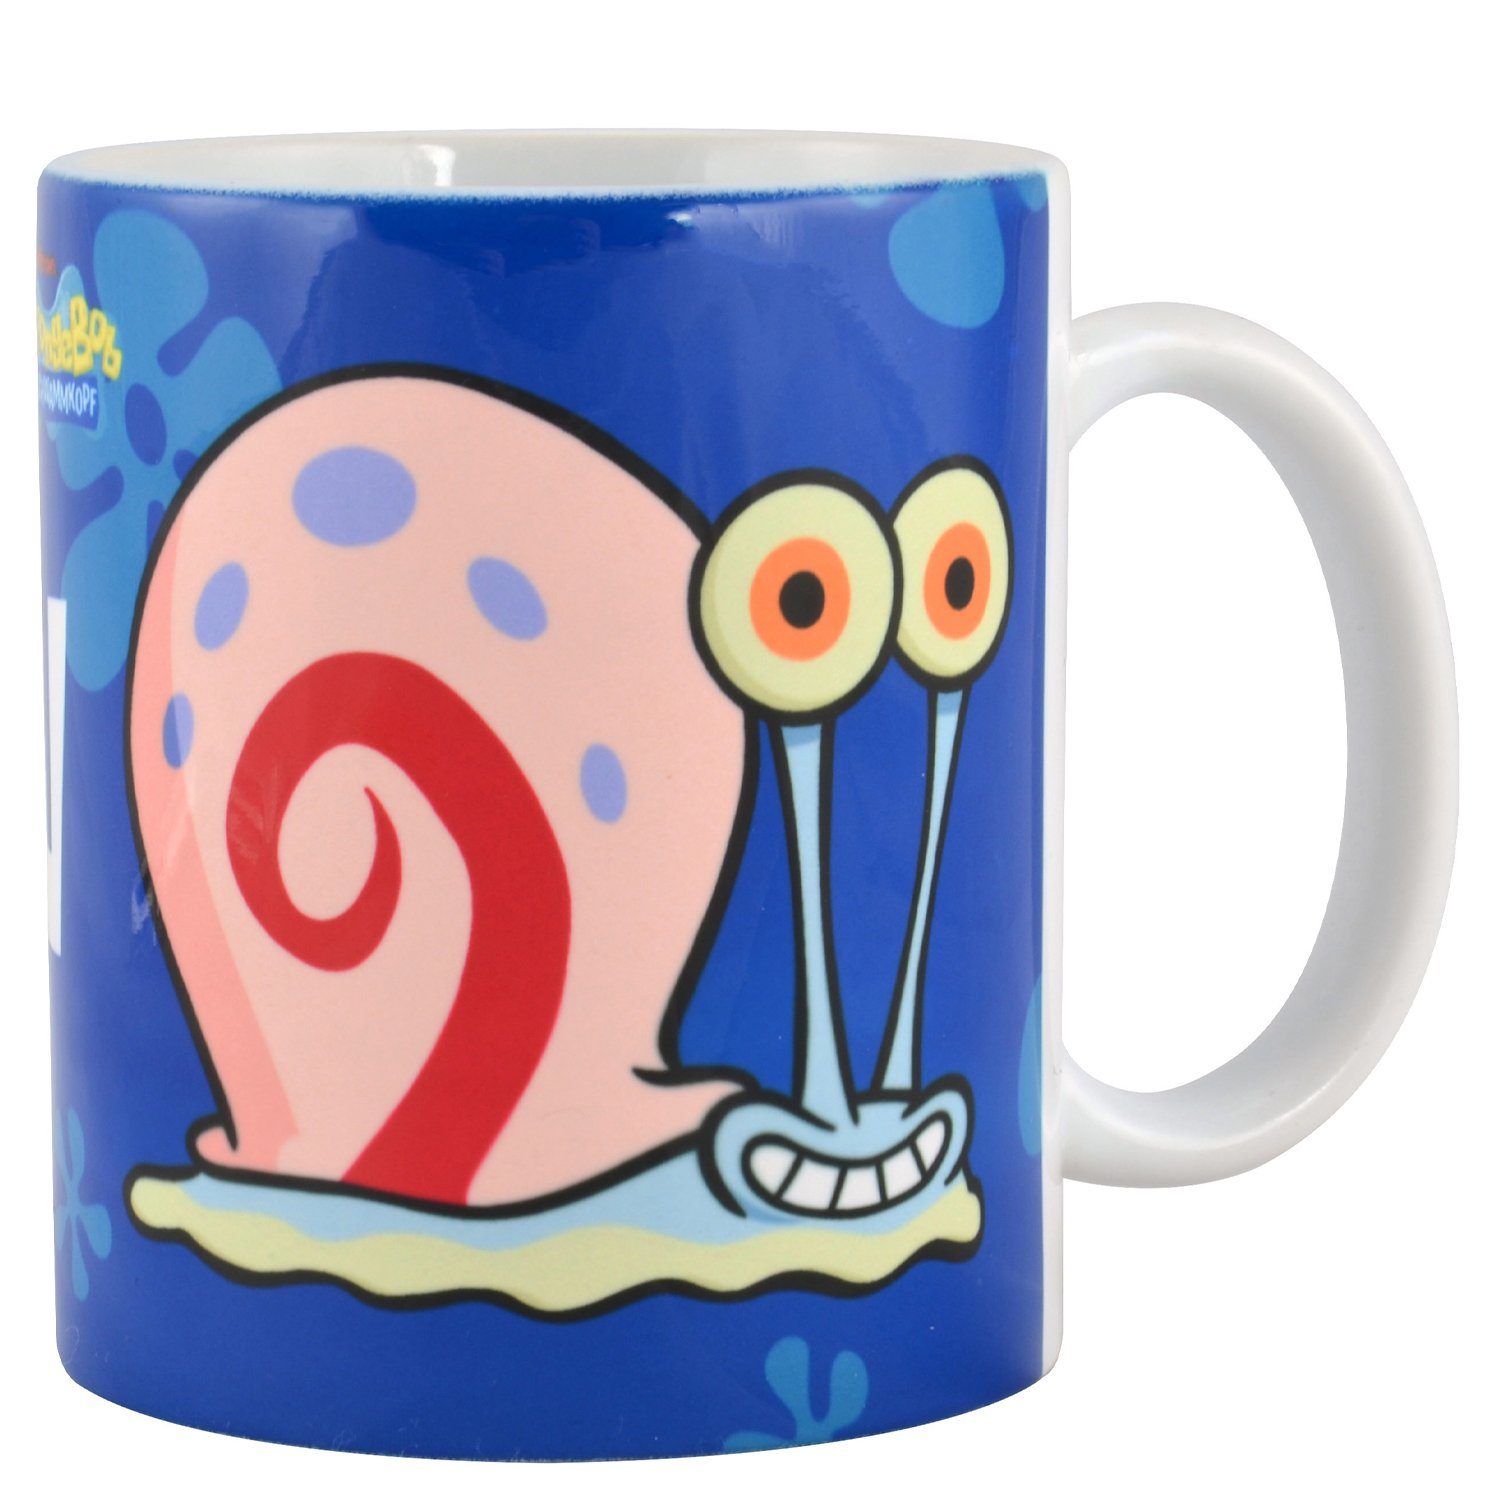 Keramik - Gary ml, United 320 Meow Tasse Spongebob Labels® Tasse